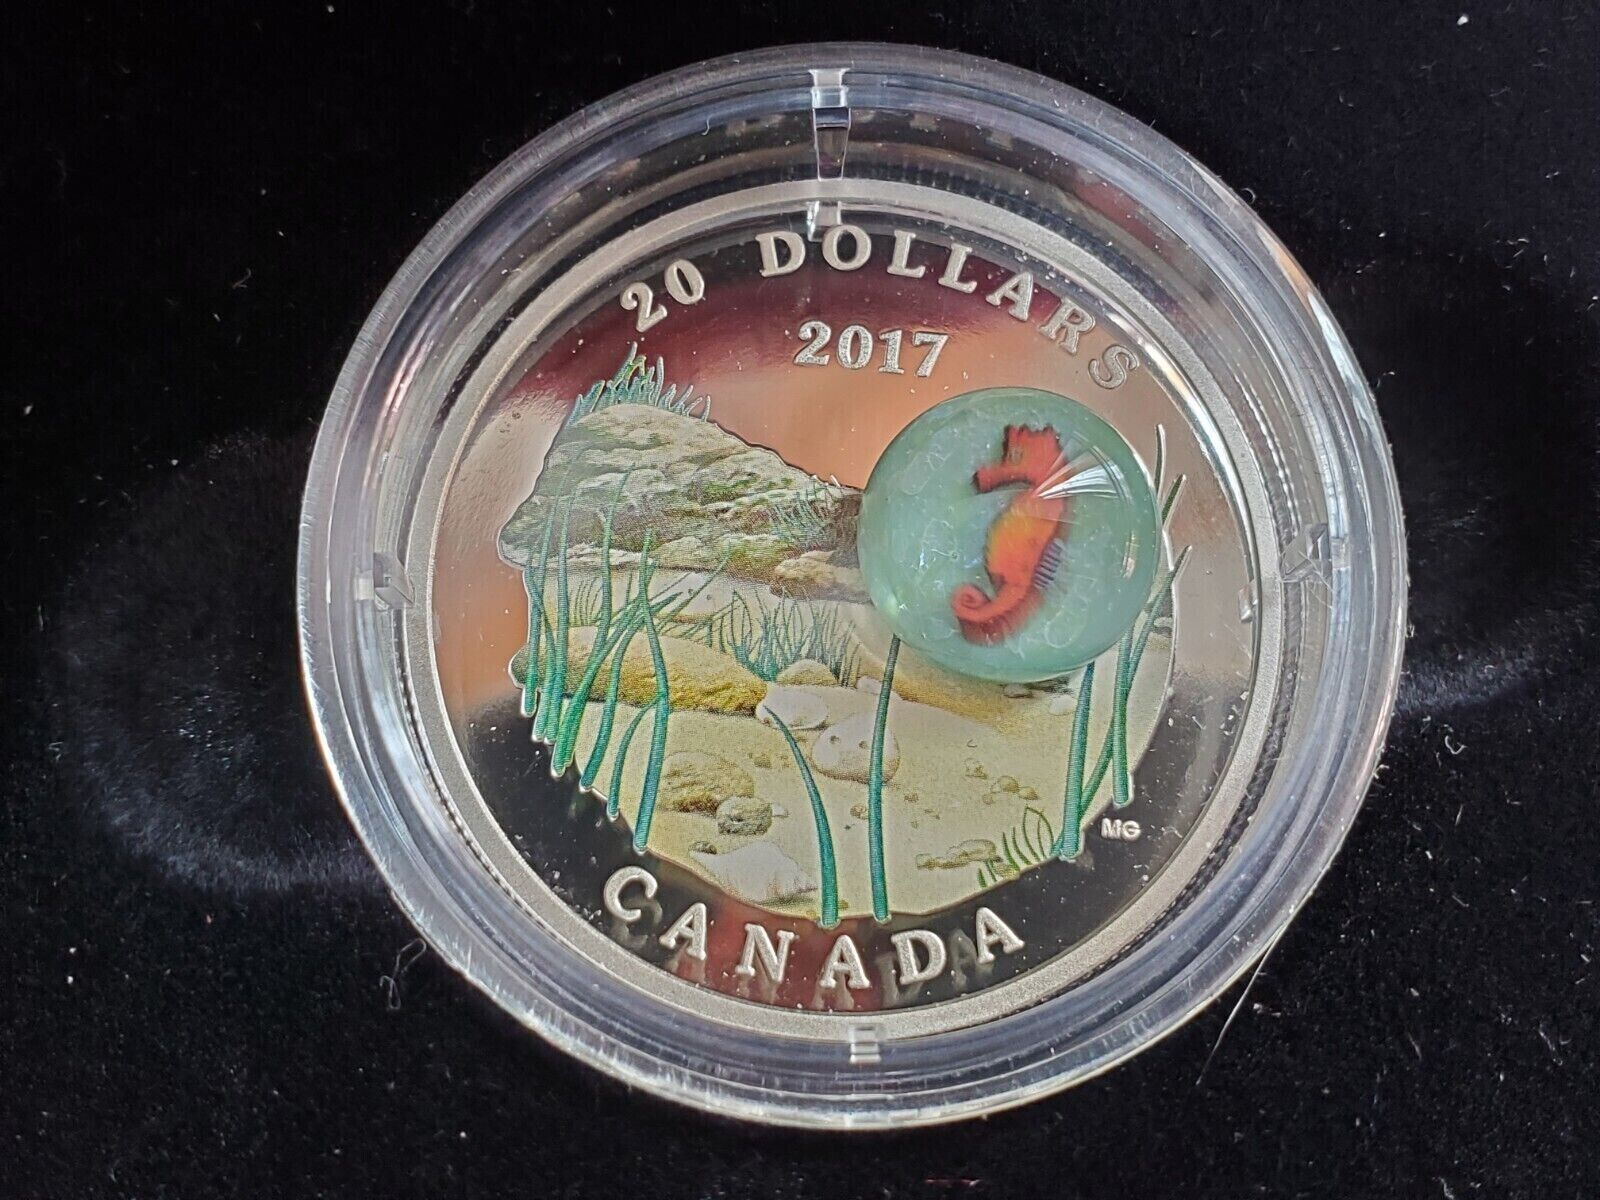 31.39g Silver Coin 2017 Canada $20 Murrini Glass Proof Under the Sea - Seahorse-classypw.com-7